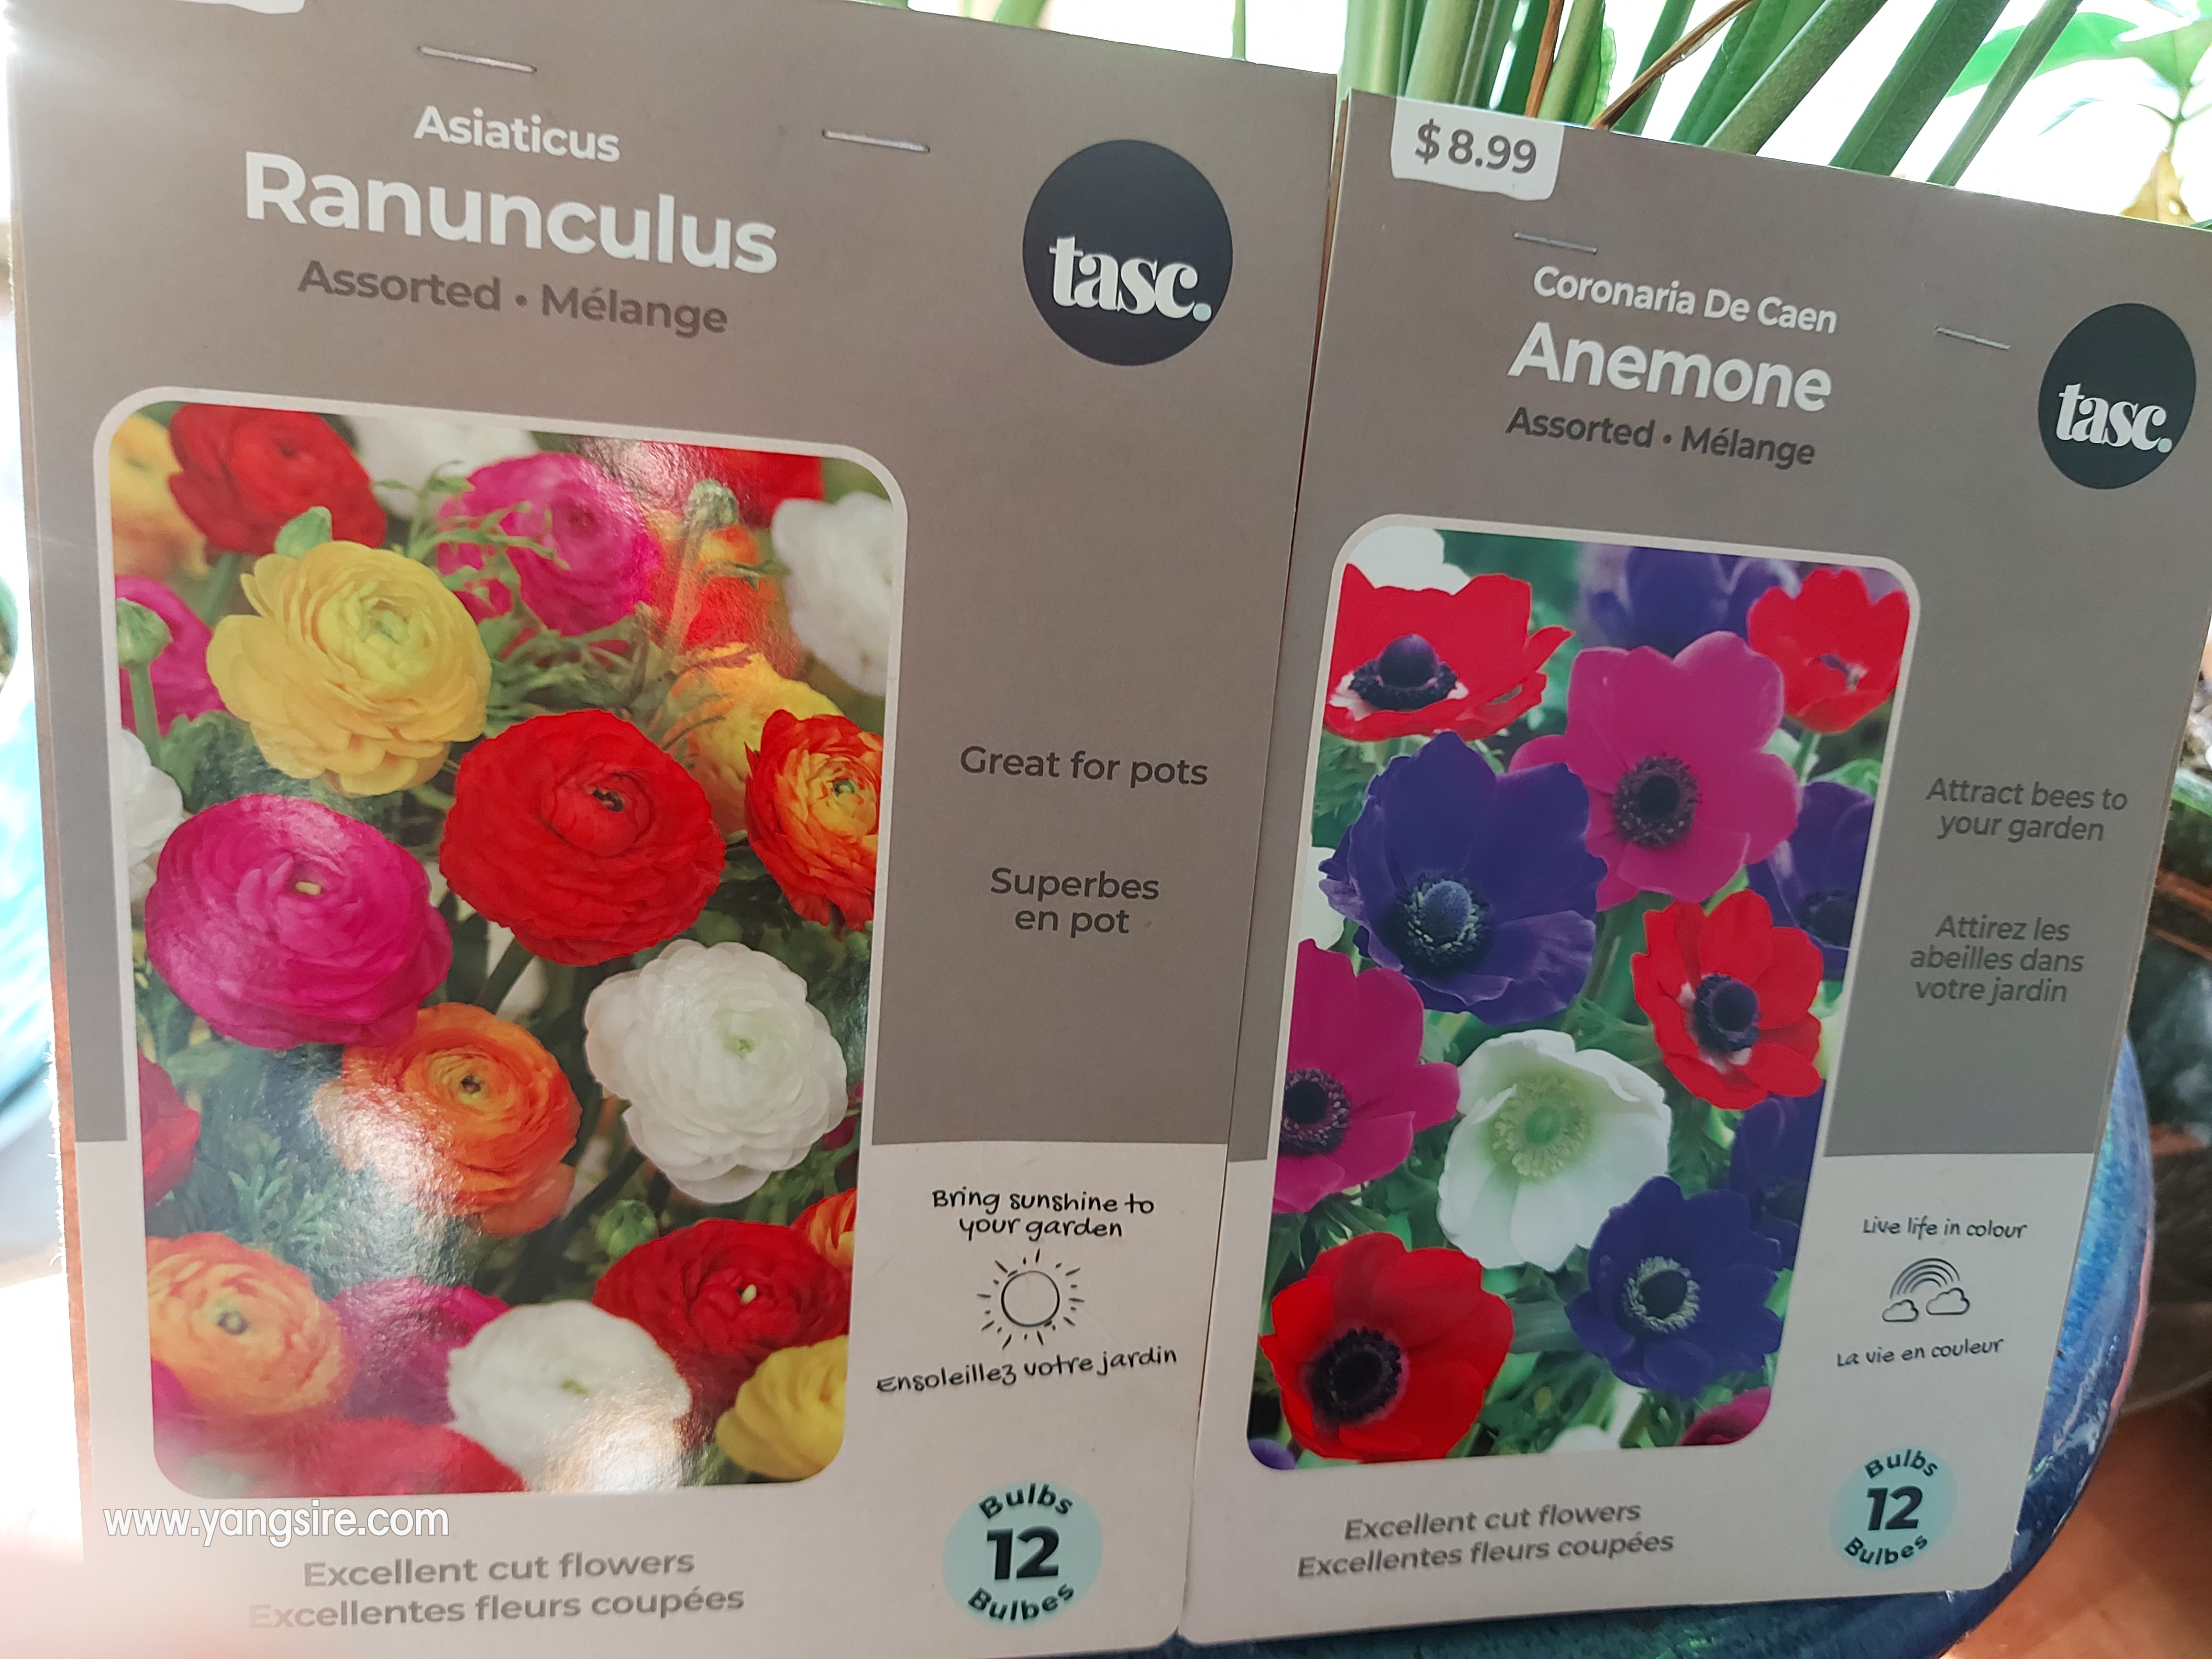 Ranunculus and Anemone bulbs plants